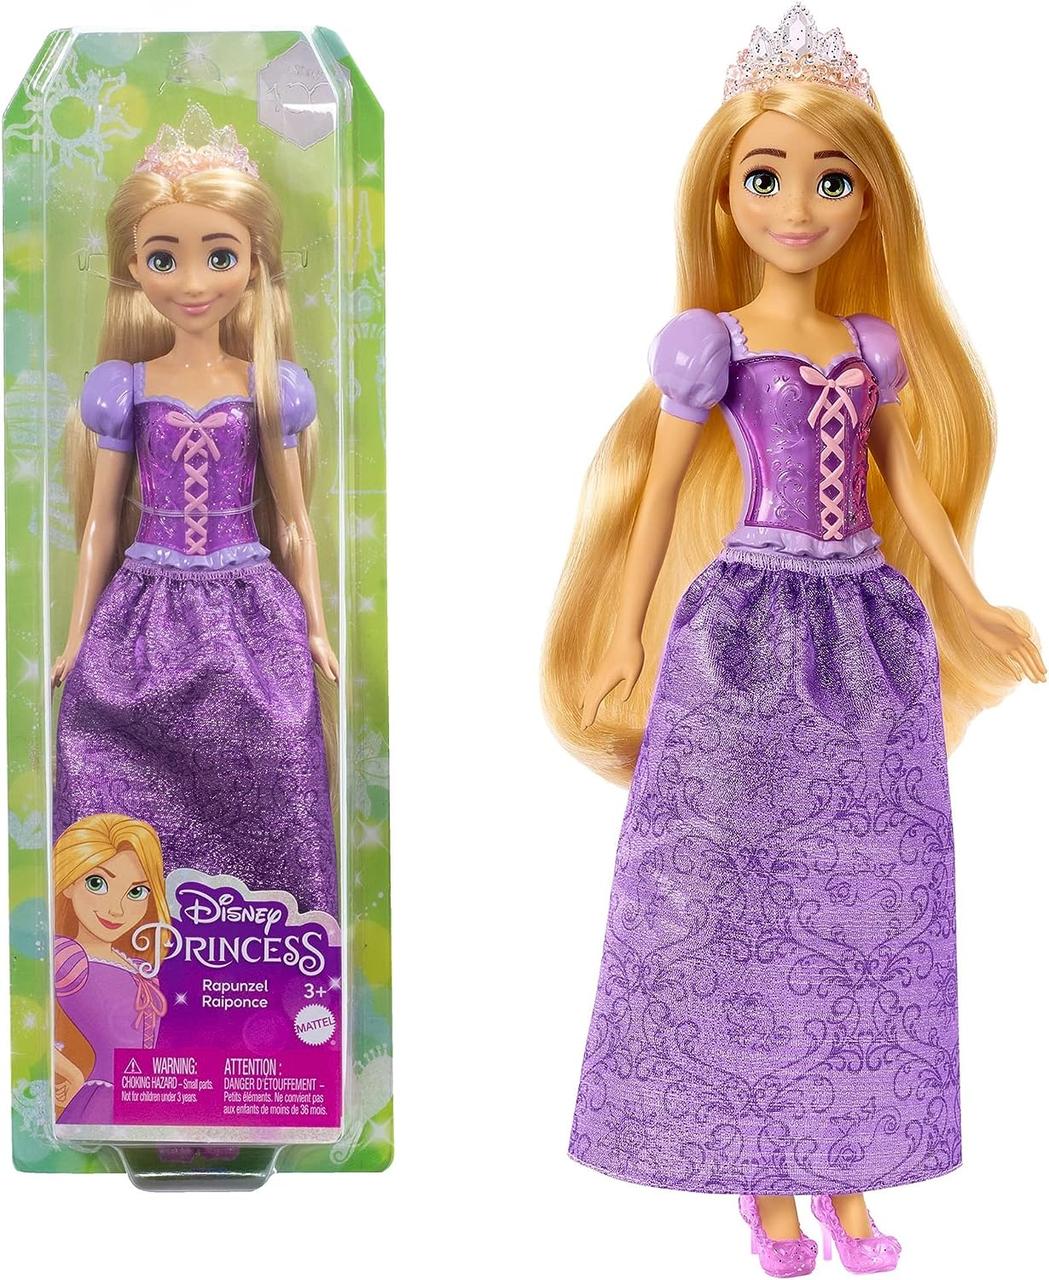 Лялька Рапунцель 27 см Принцеса Дісней Disney Princess Rapunzel Mattel